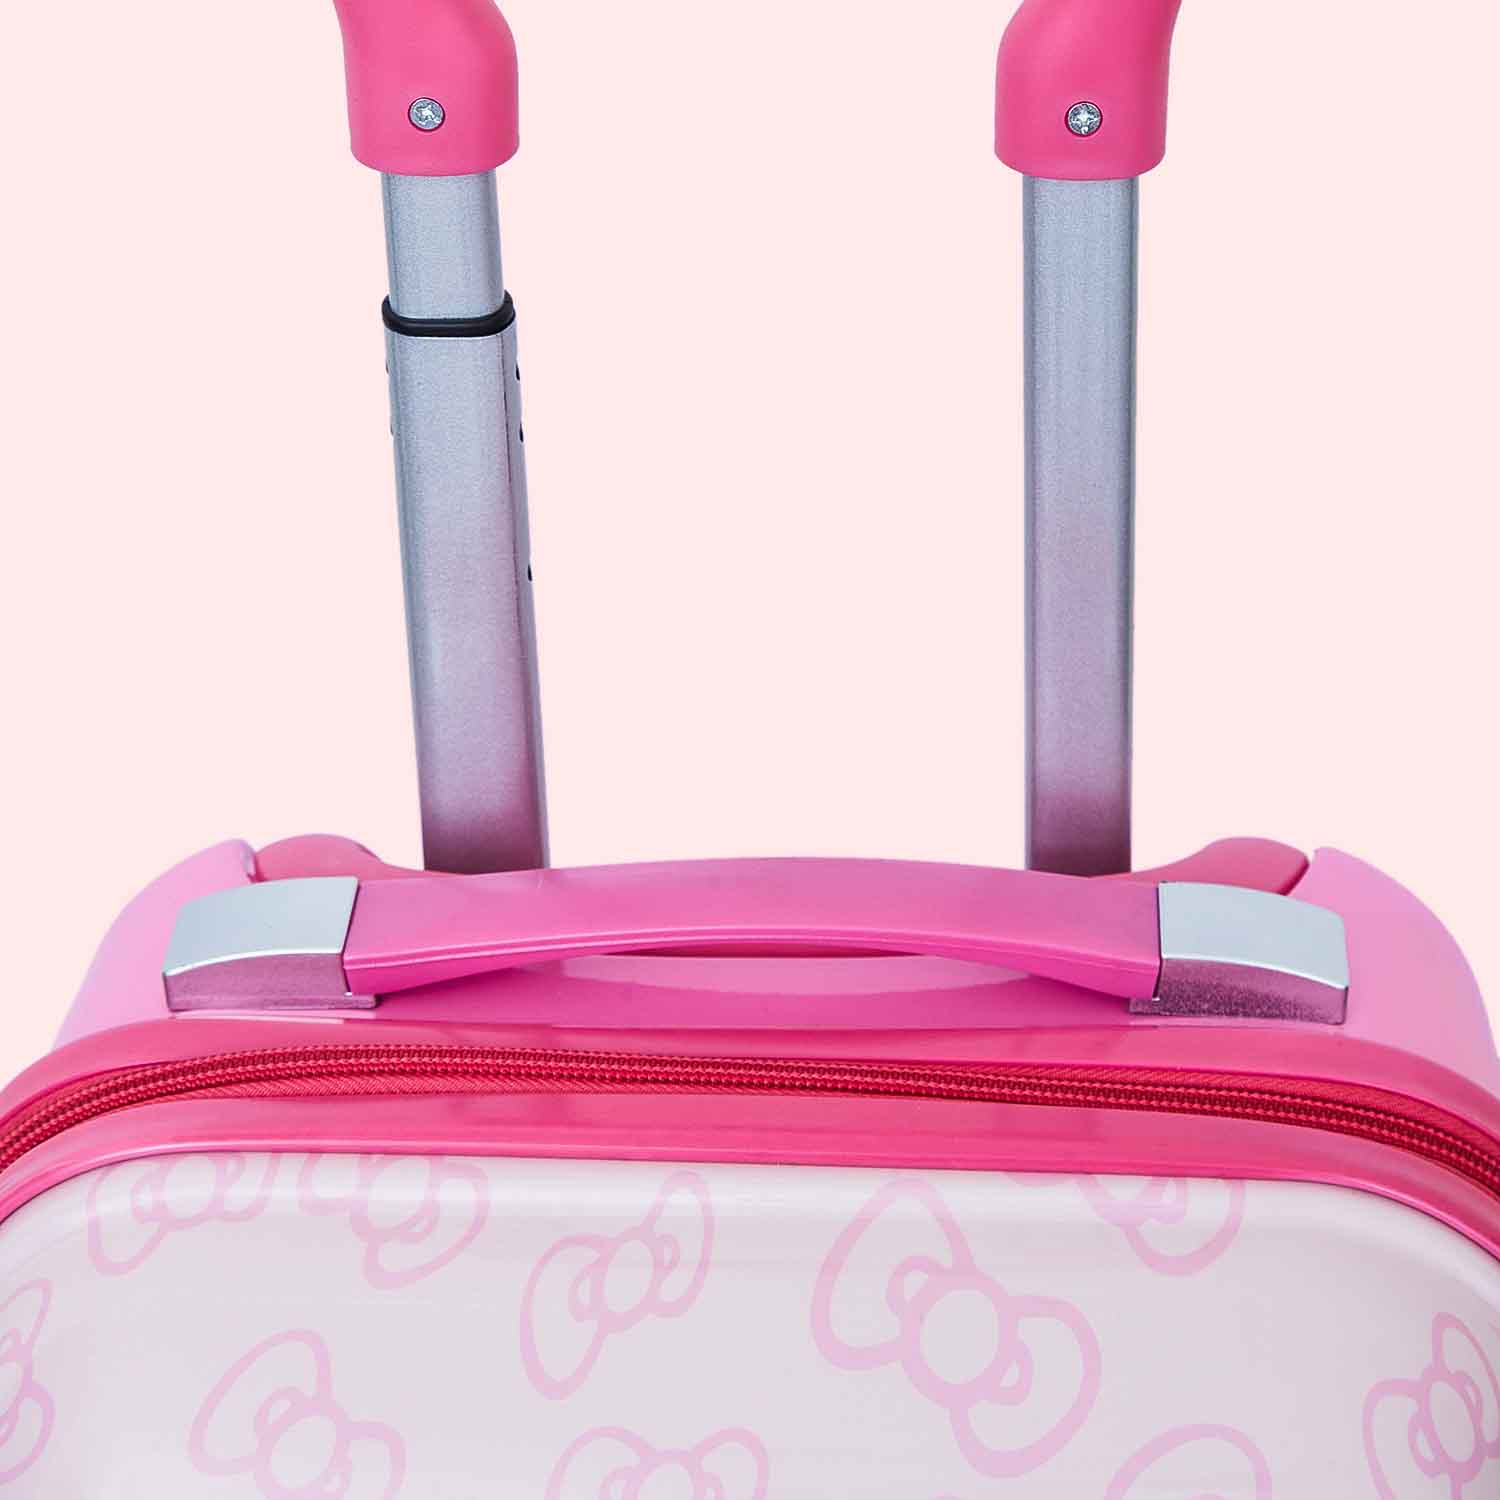 Big Roamer Trolley Bag - Hello Kitty